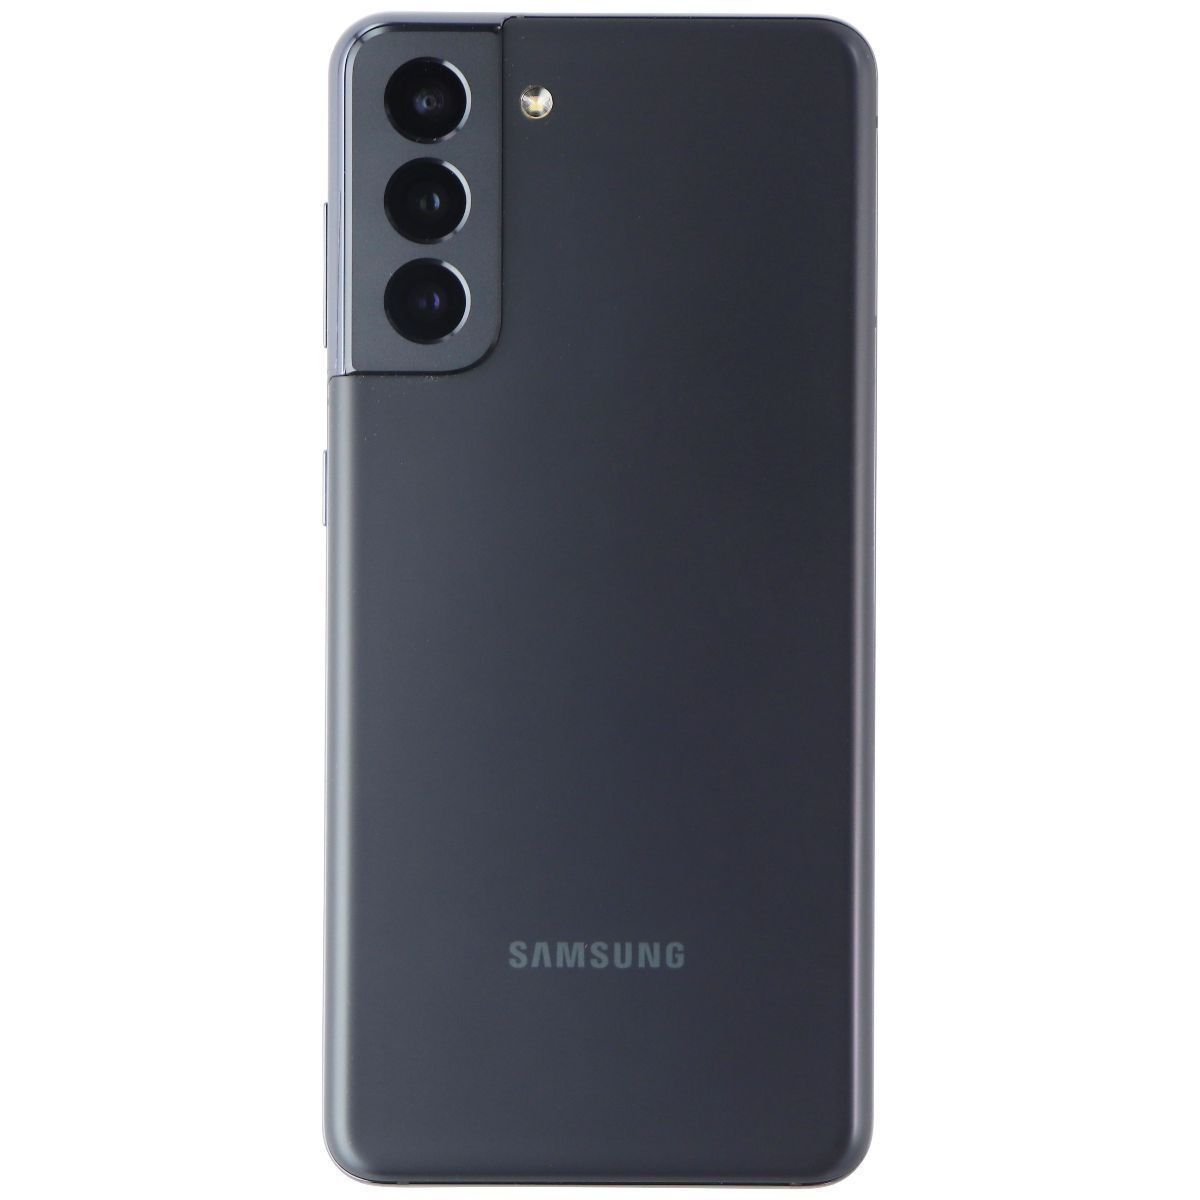 Samsung Galaxy S21 5G (6.2-inch) (SM-G991U) Verizon - 256GB/Phantom Gray Cell Phones & Smartphones Samsung    - Simple Cell Bulk Wholesale Pricing - USA Seller